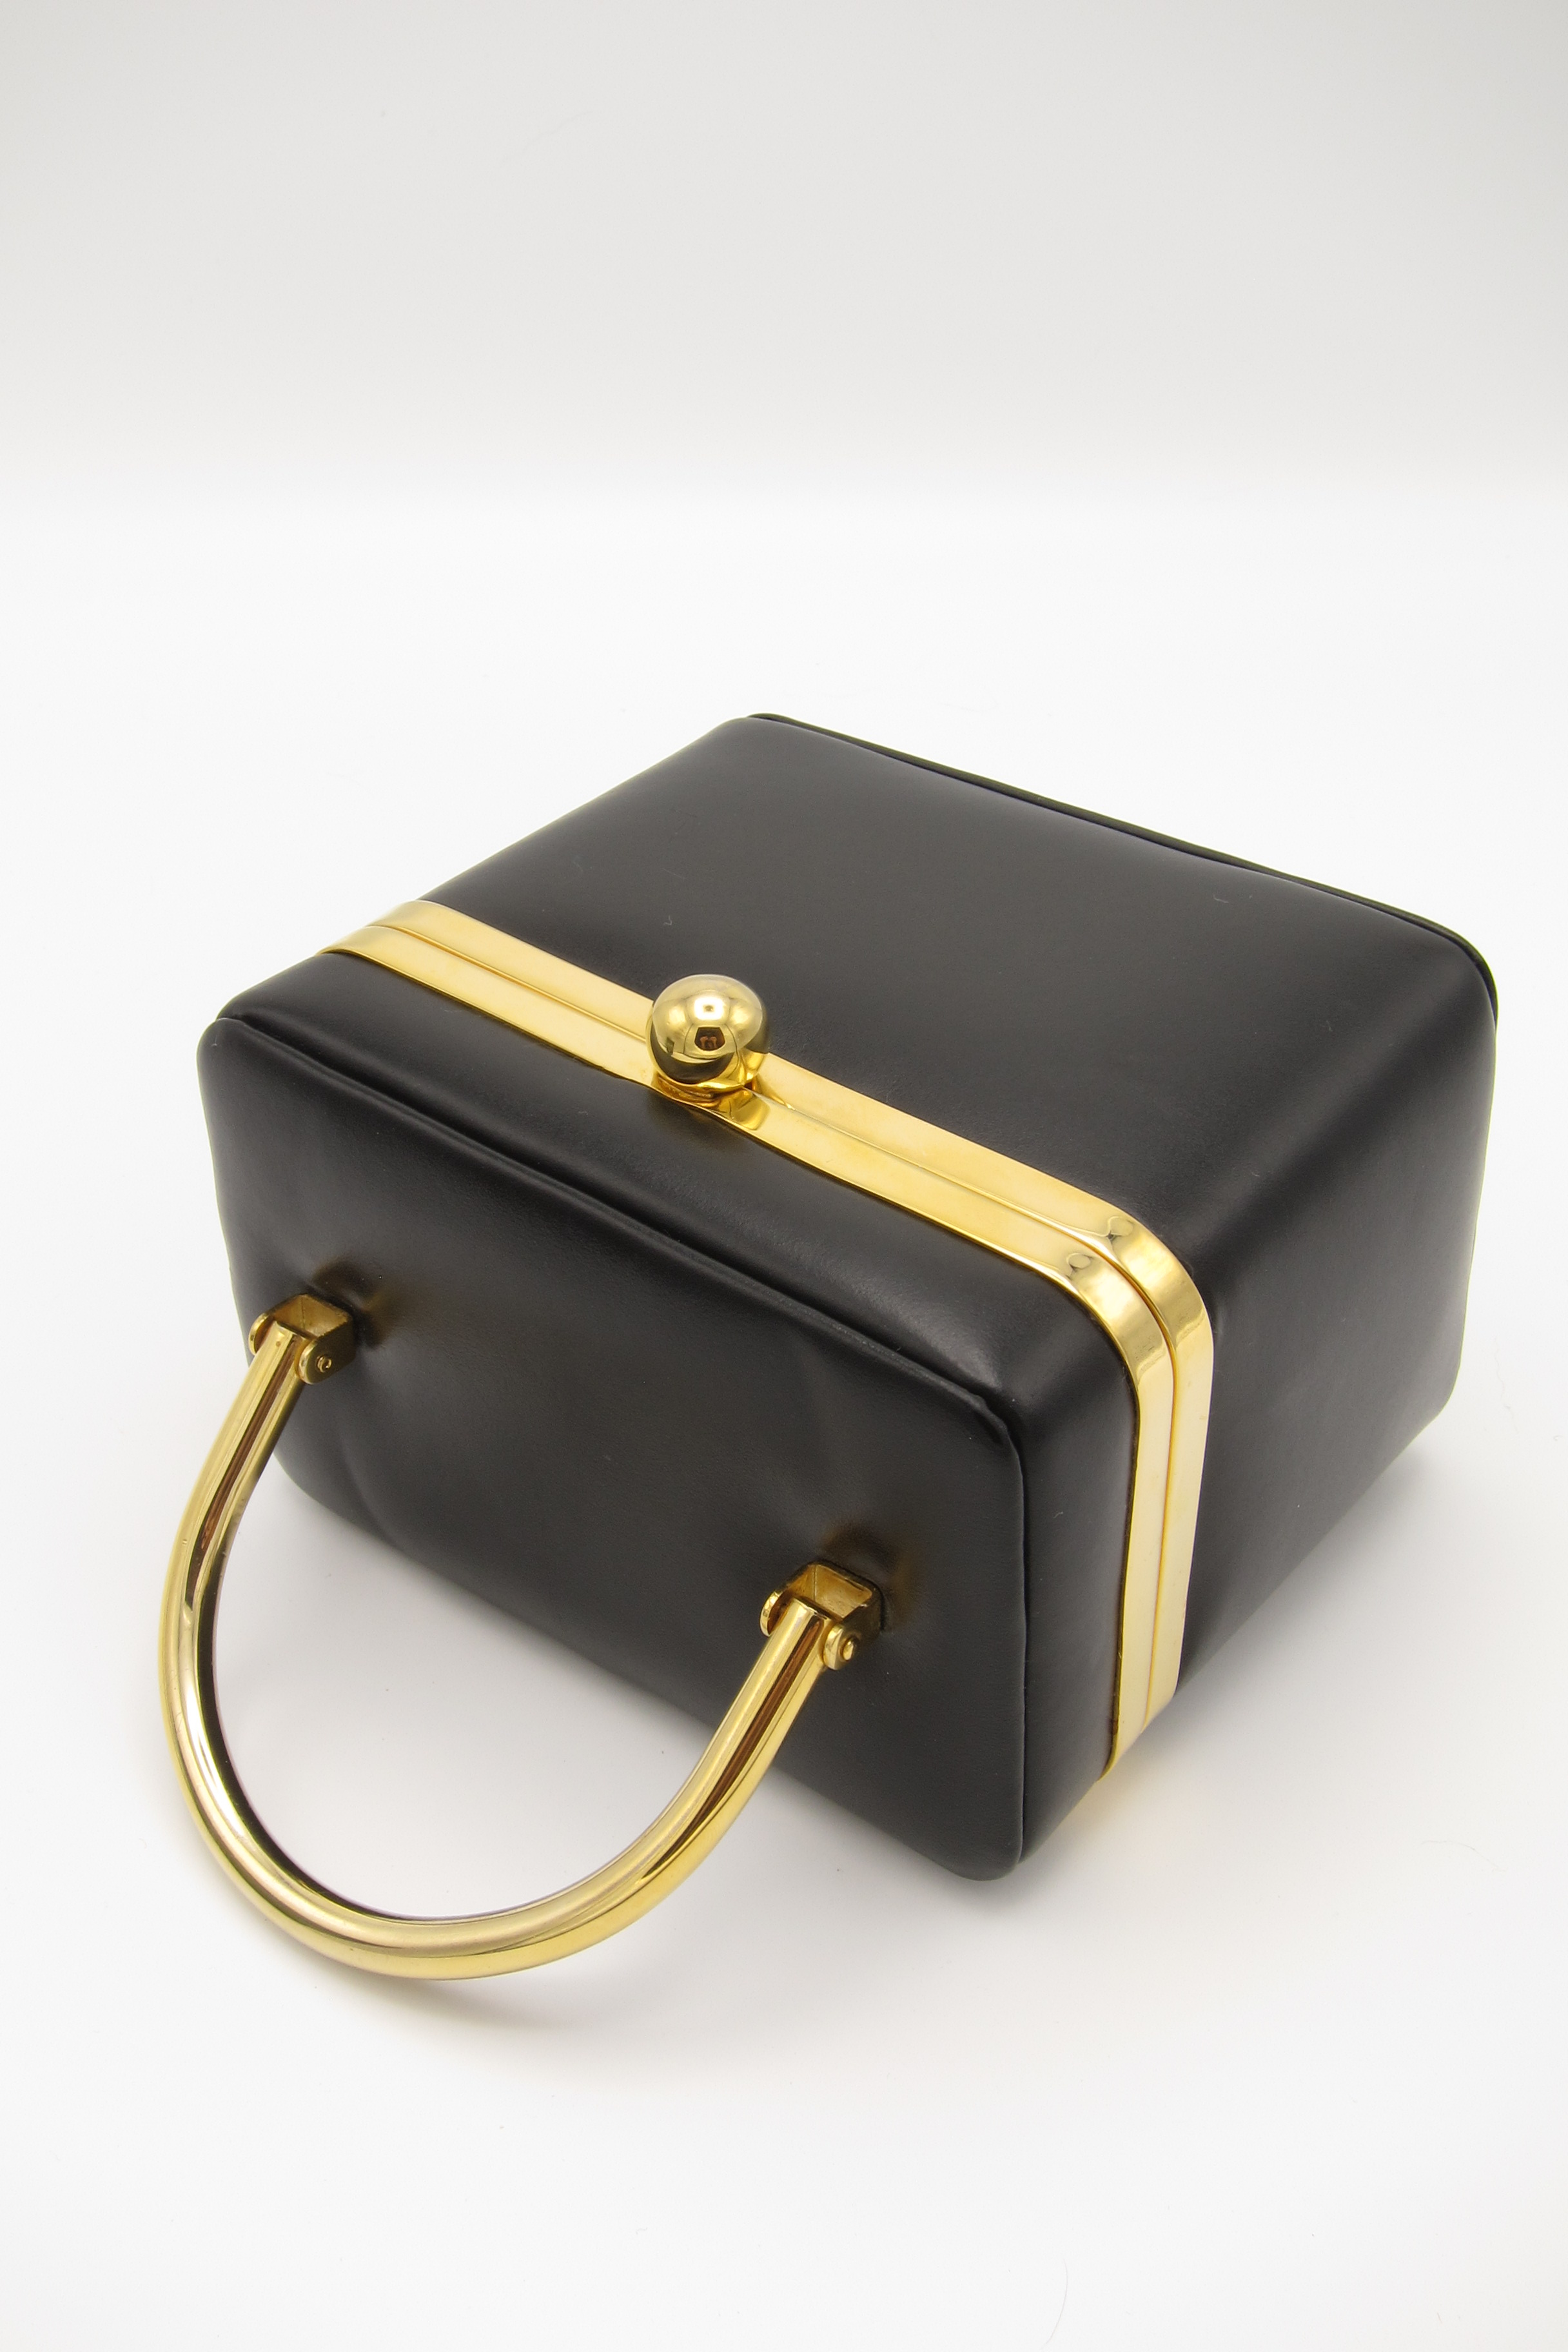 Hermes Bastia Change Purse Black Box Leather | Mightychic